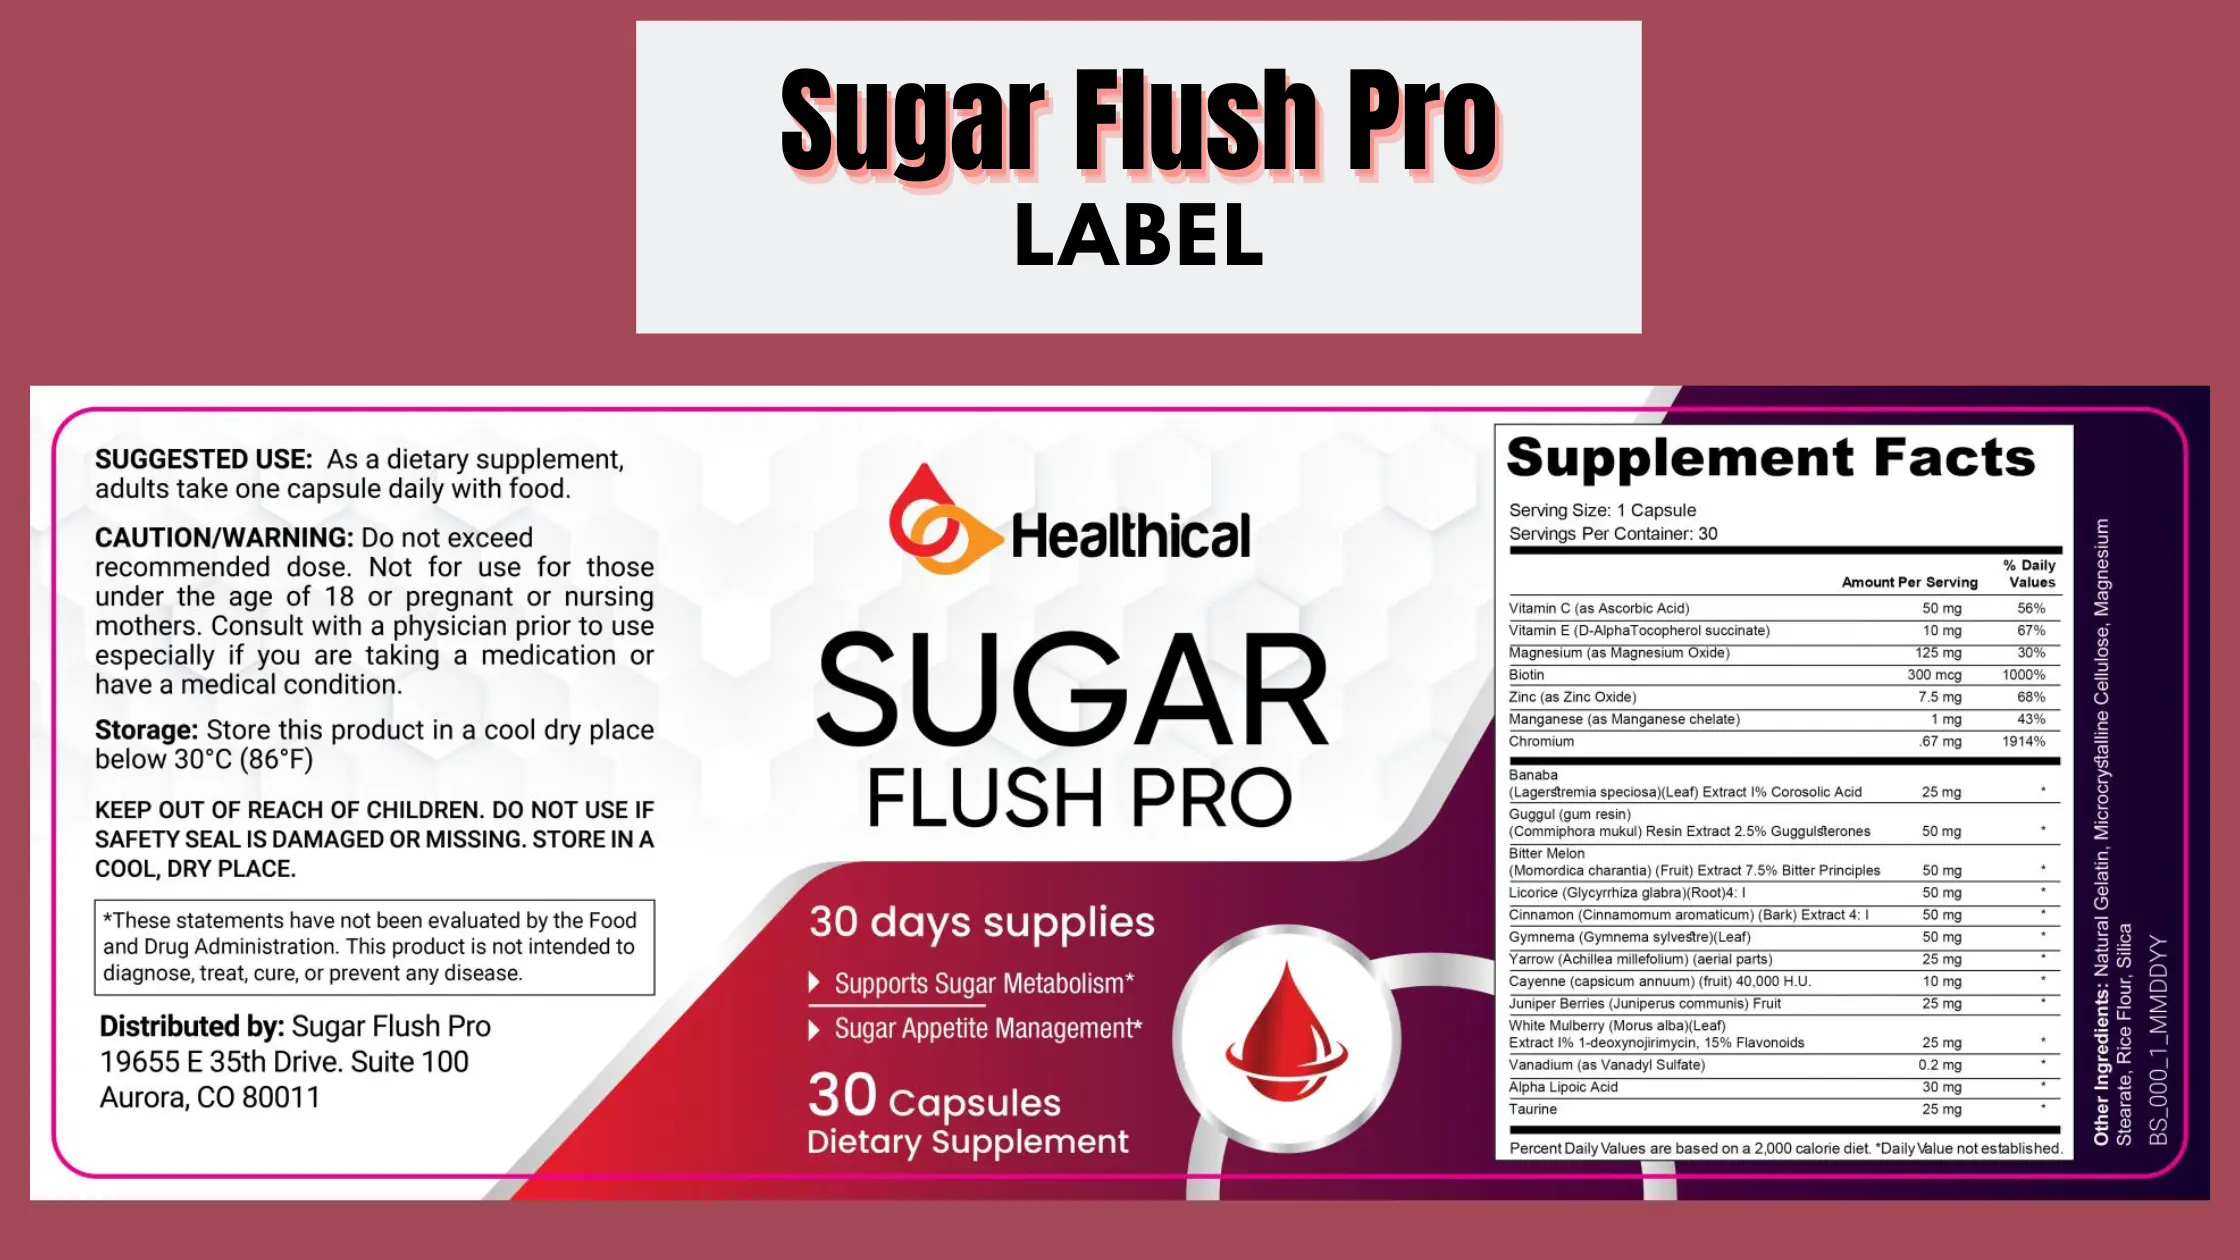 Sugar Flush Pro supplement facts